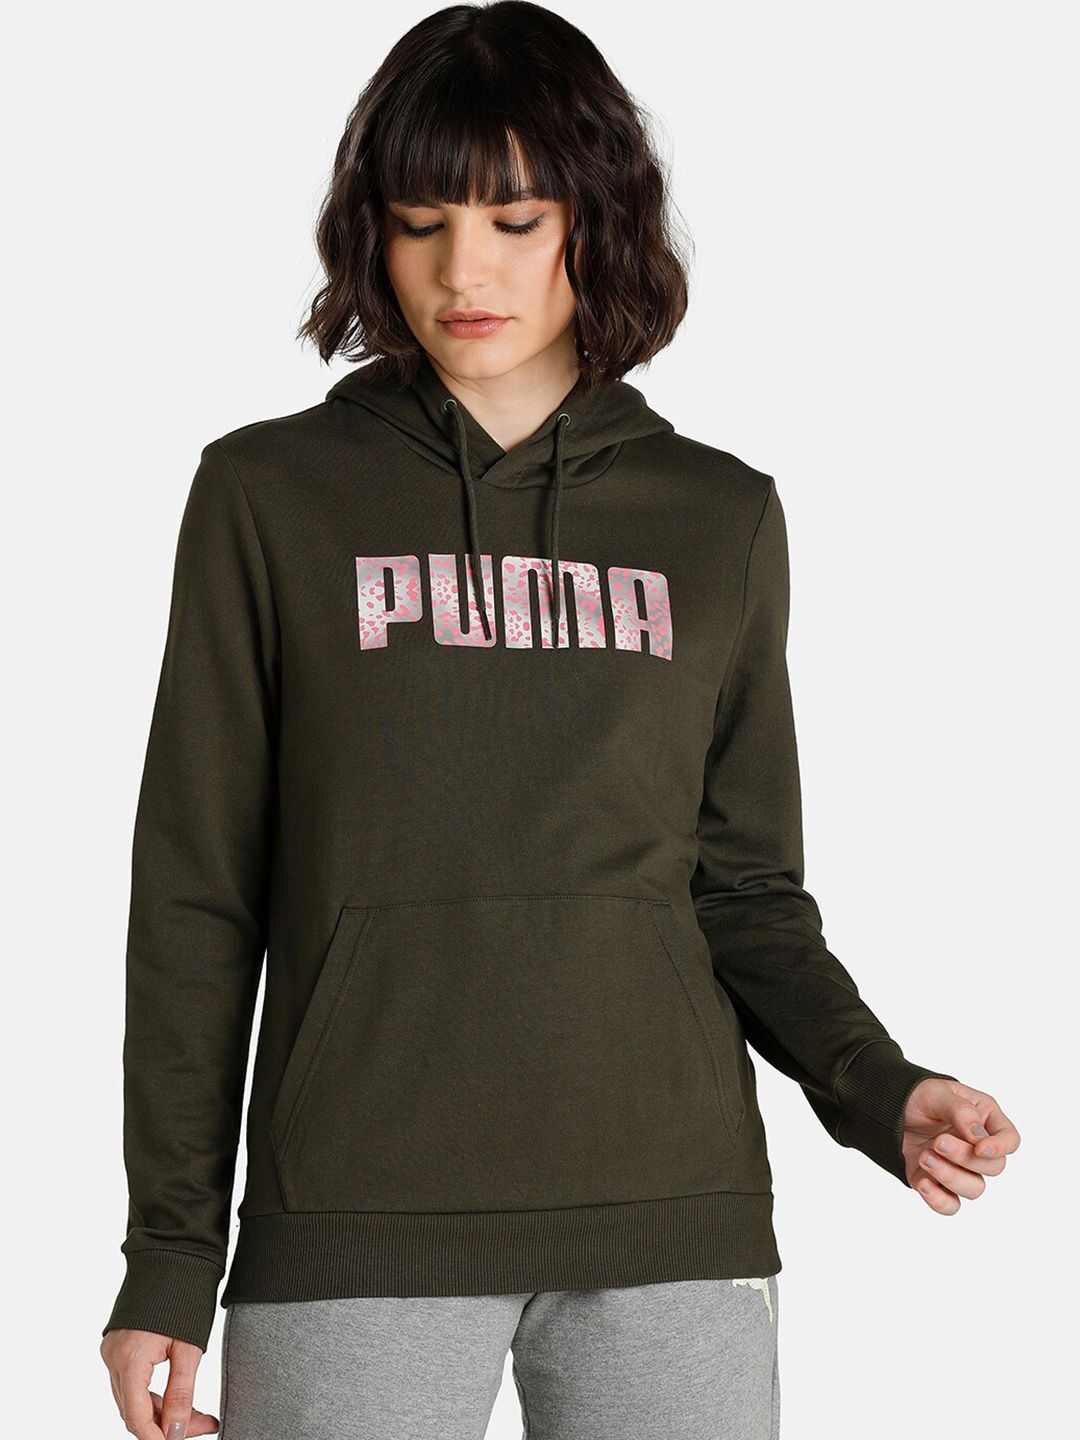 Puma Women Green Printed Hooded Sweatshirt Price in India